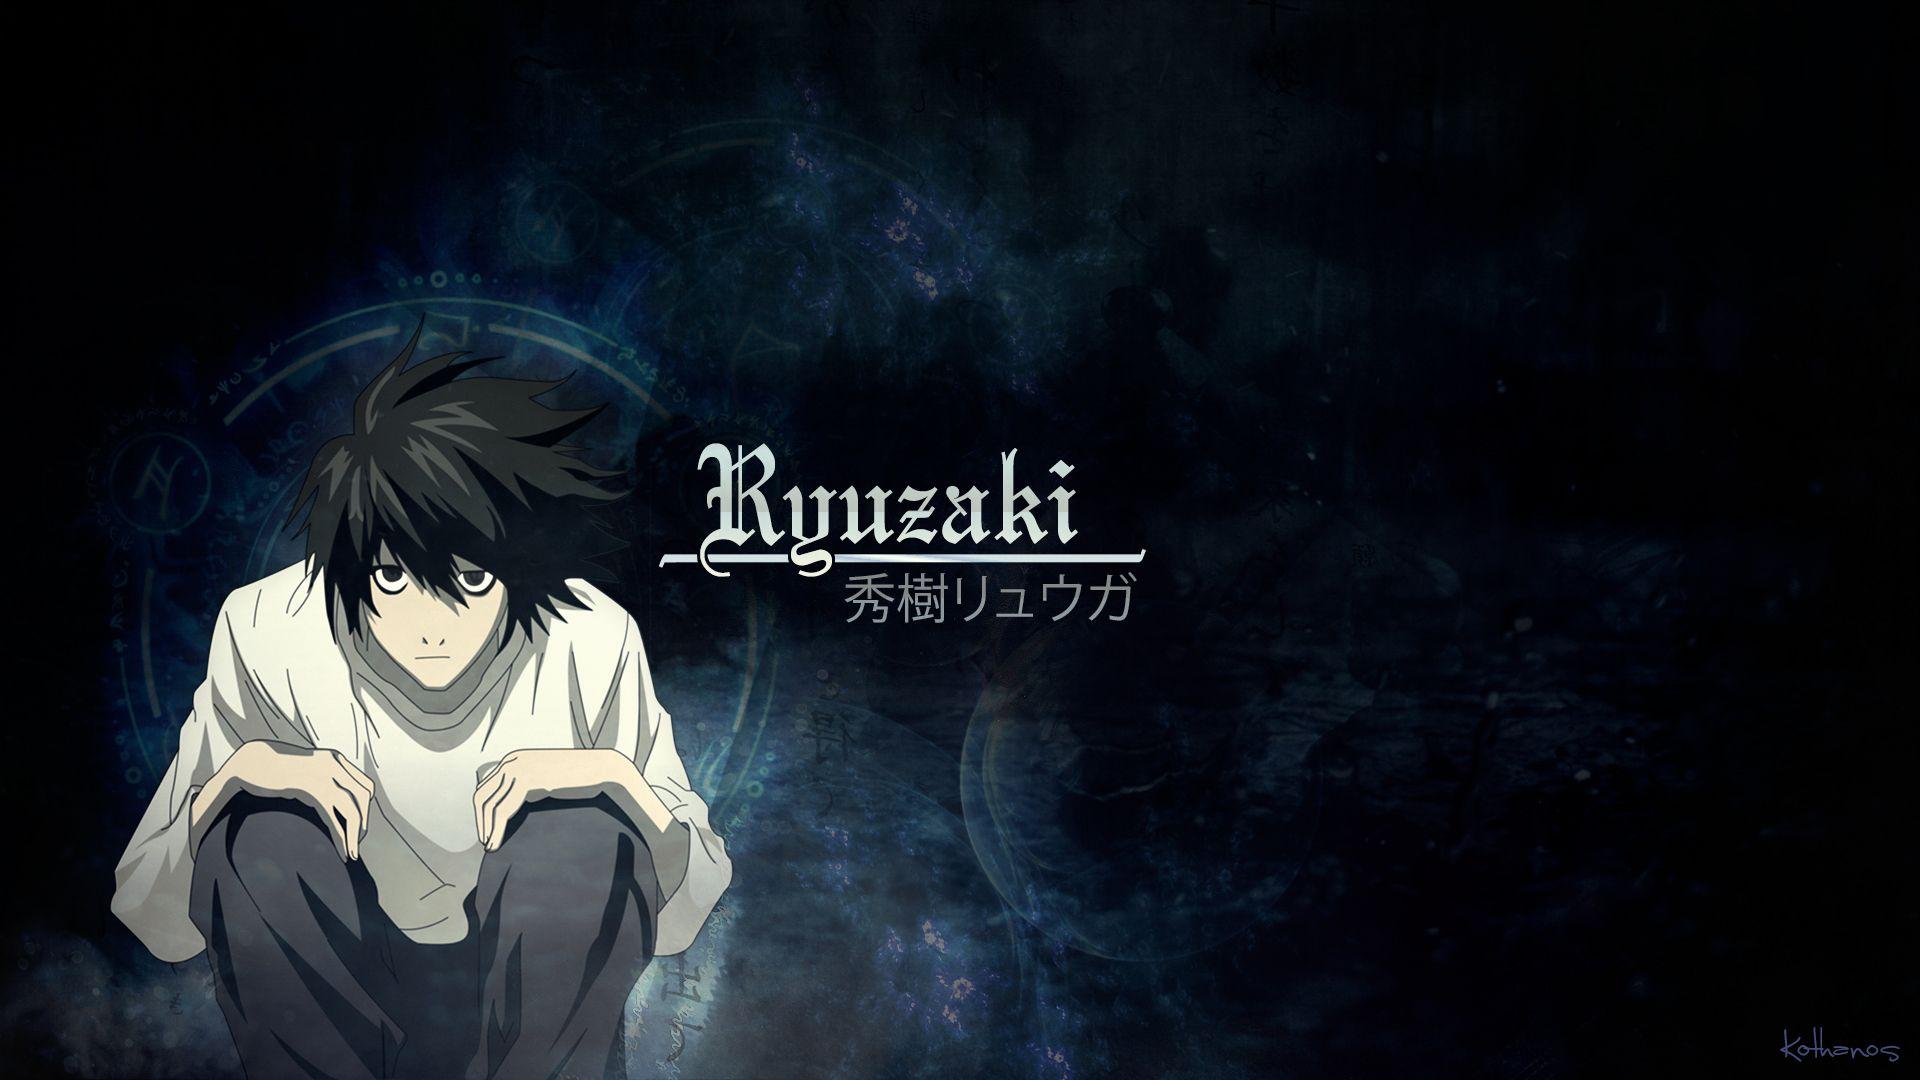 Ryuzaki wallpaper (Lock screen) edit.